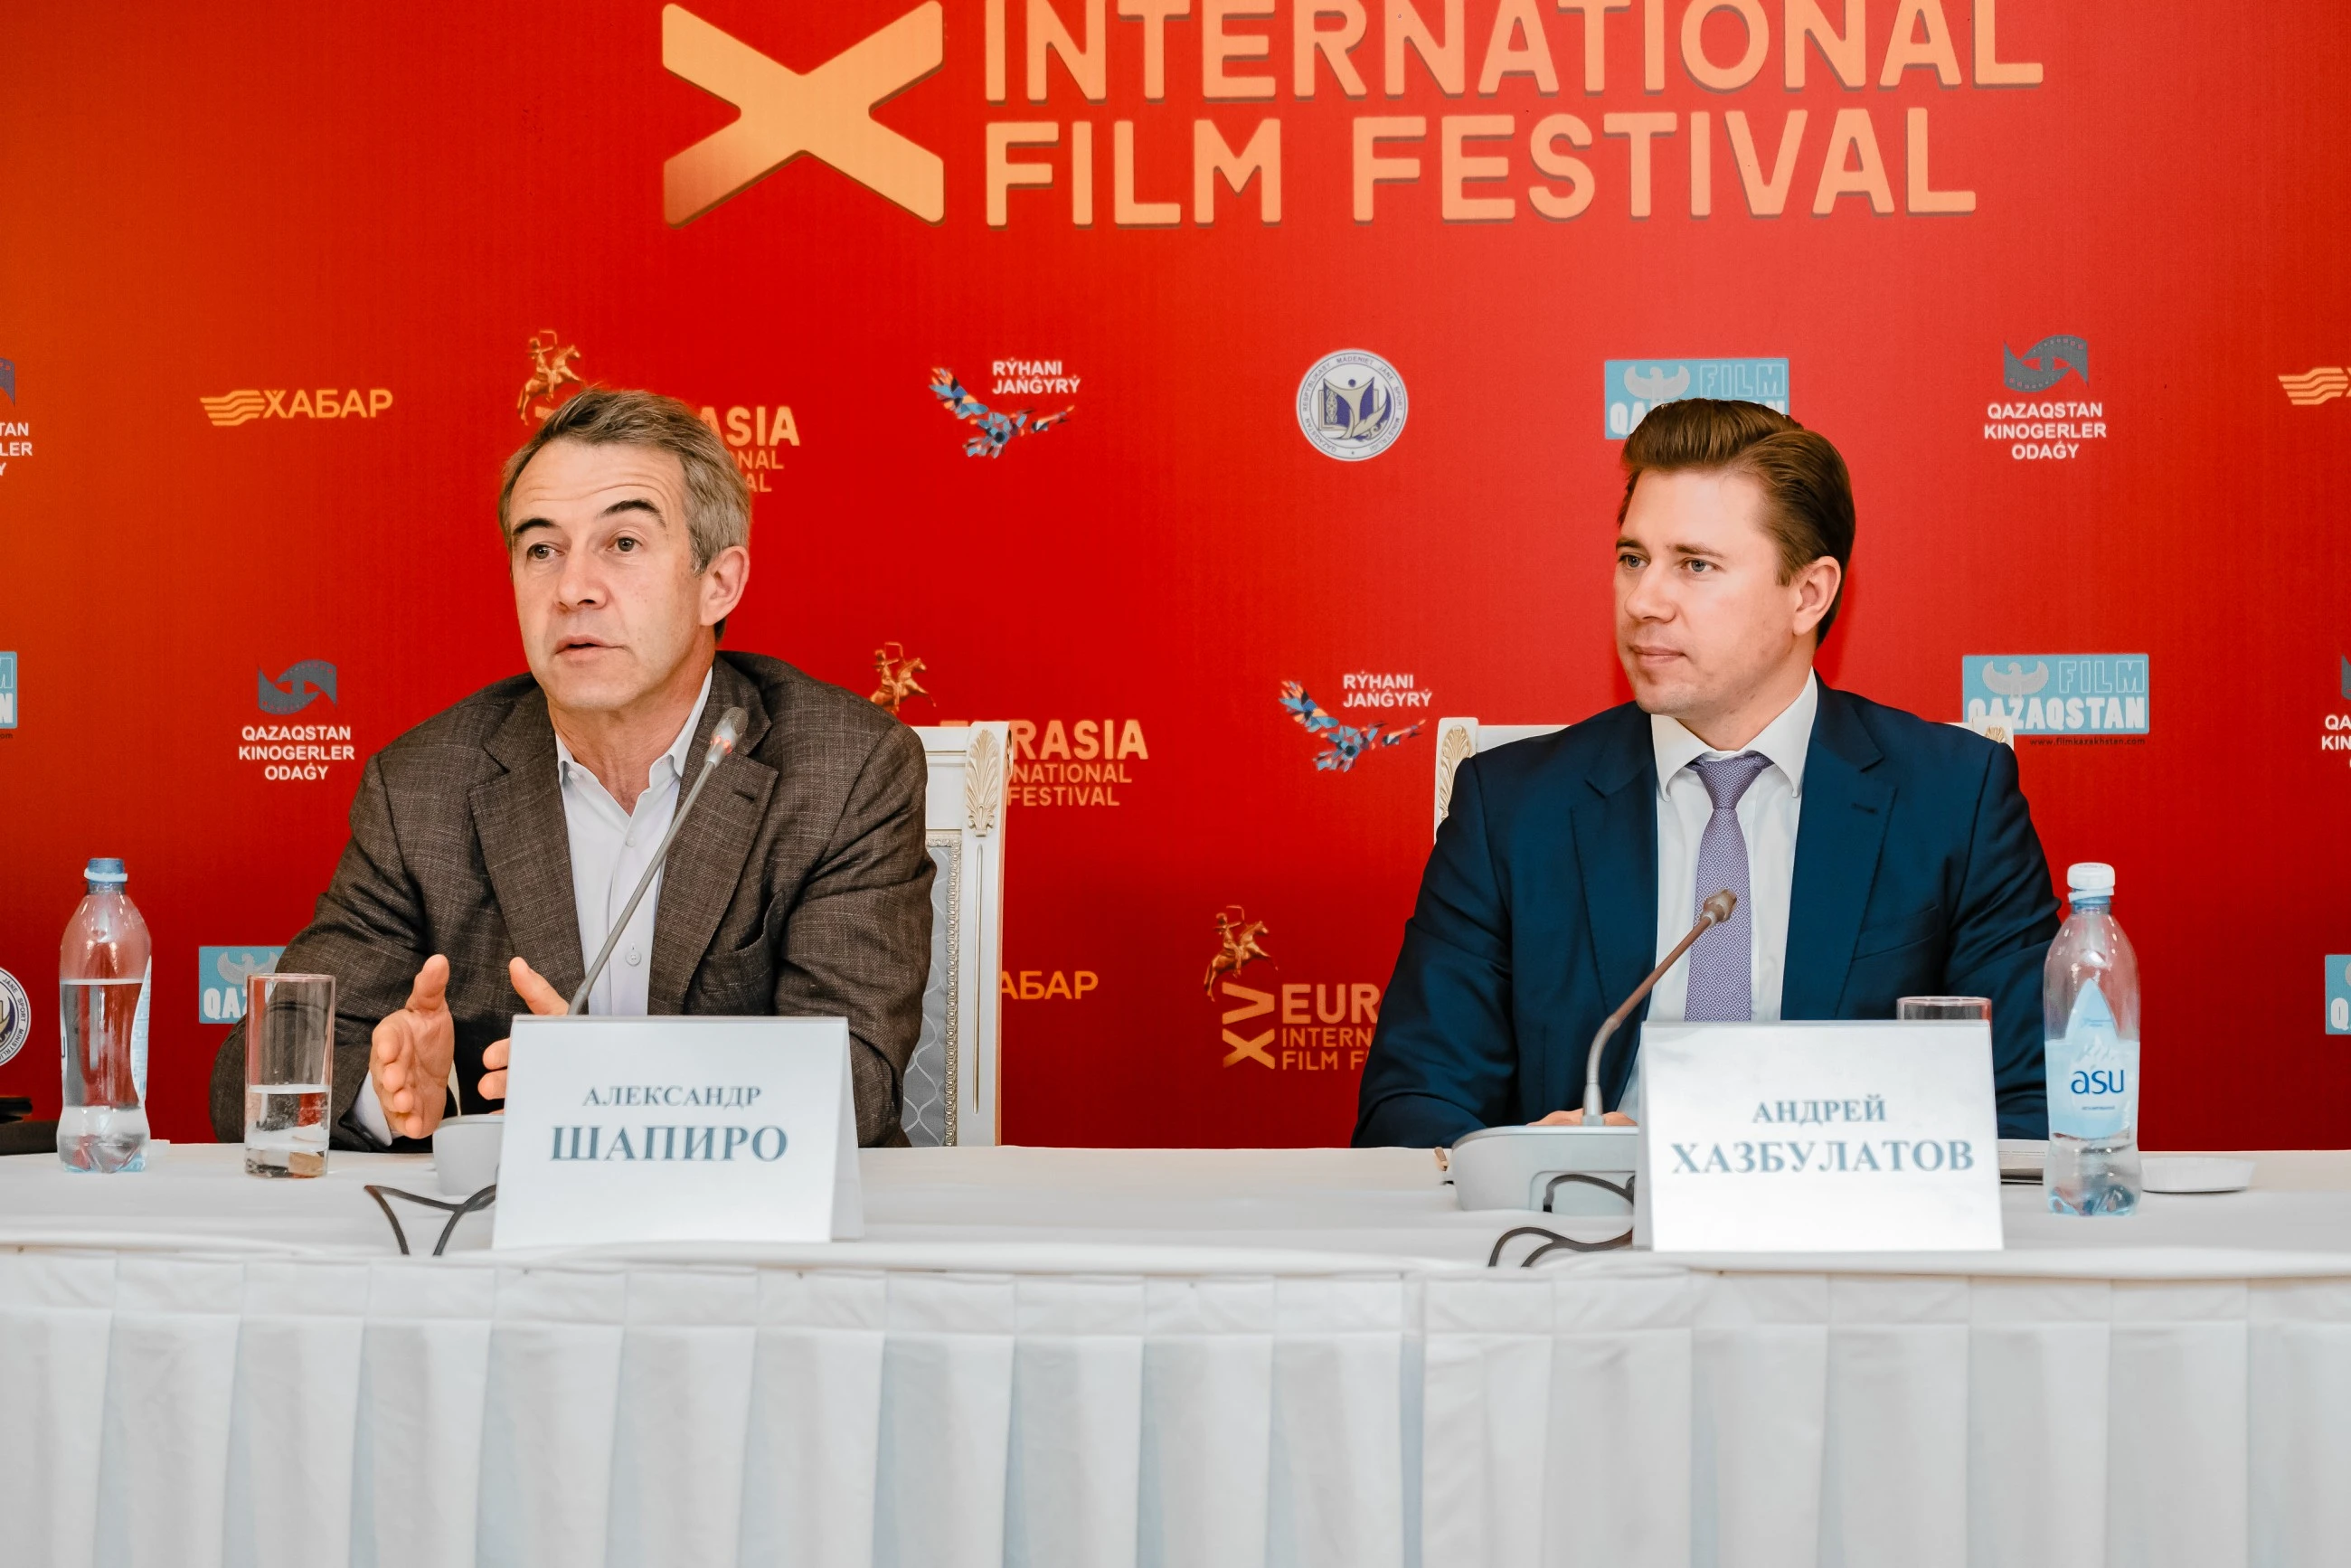 Kazakhstani cinema is open for integration